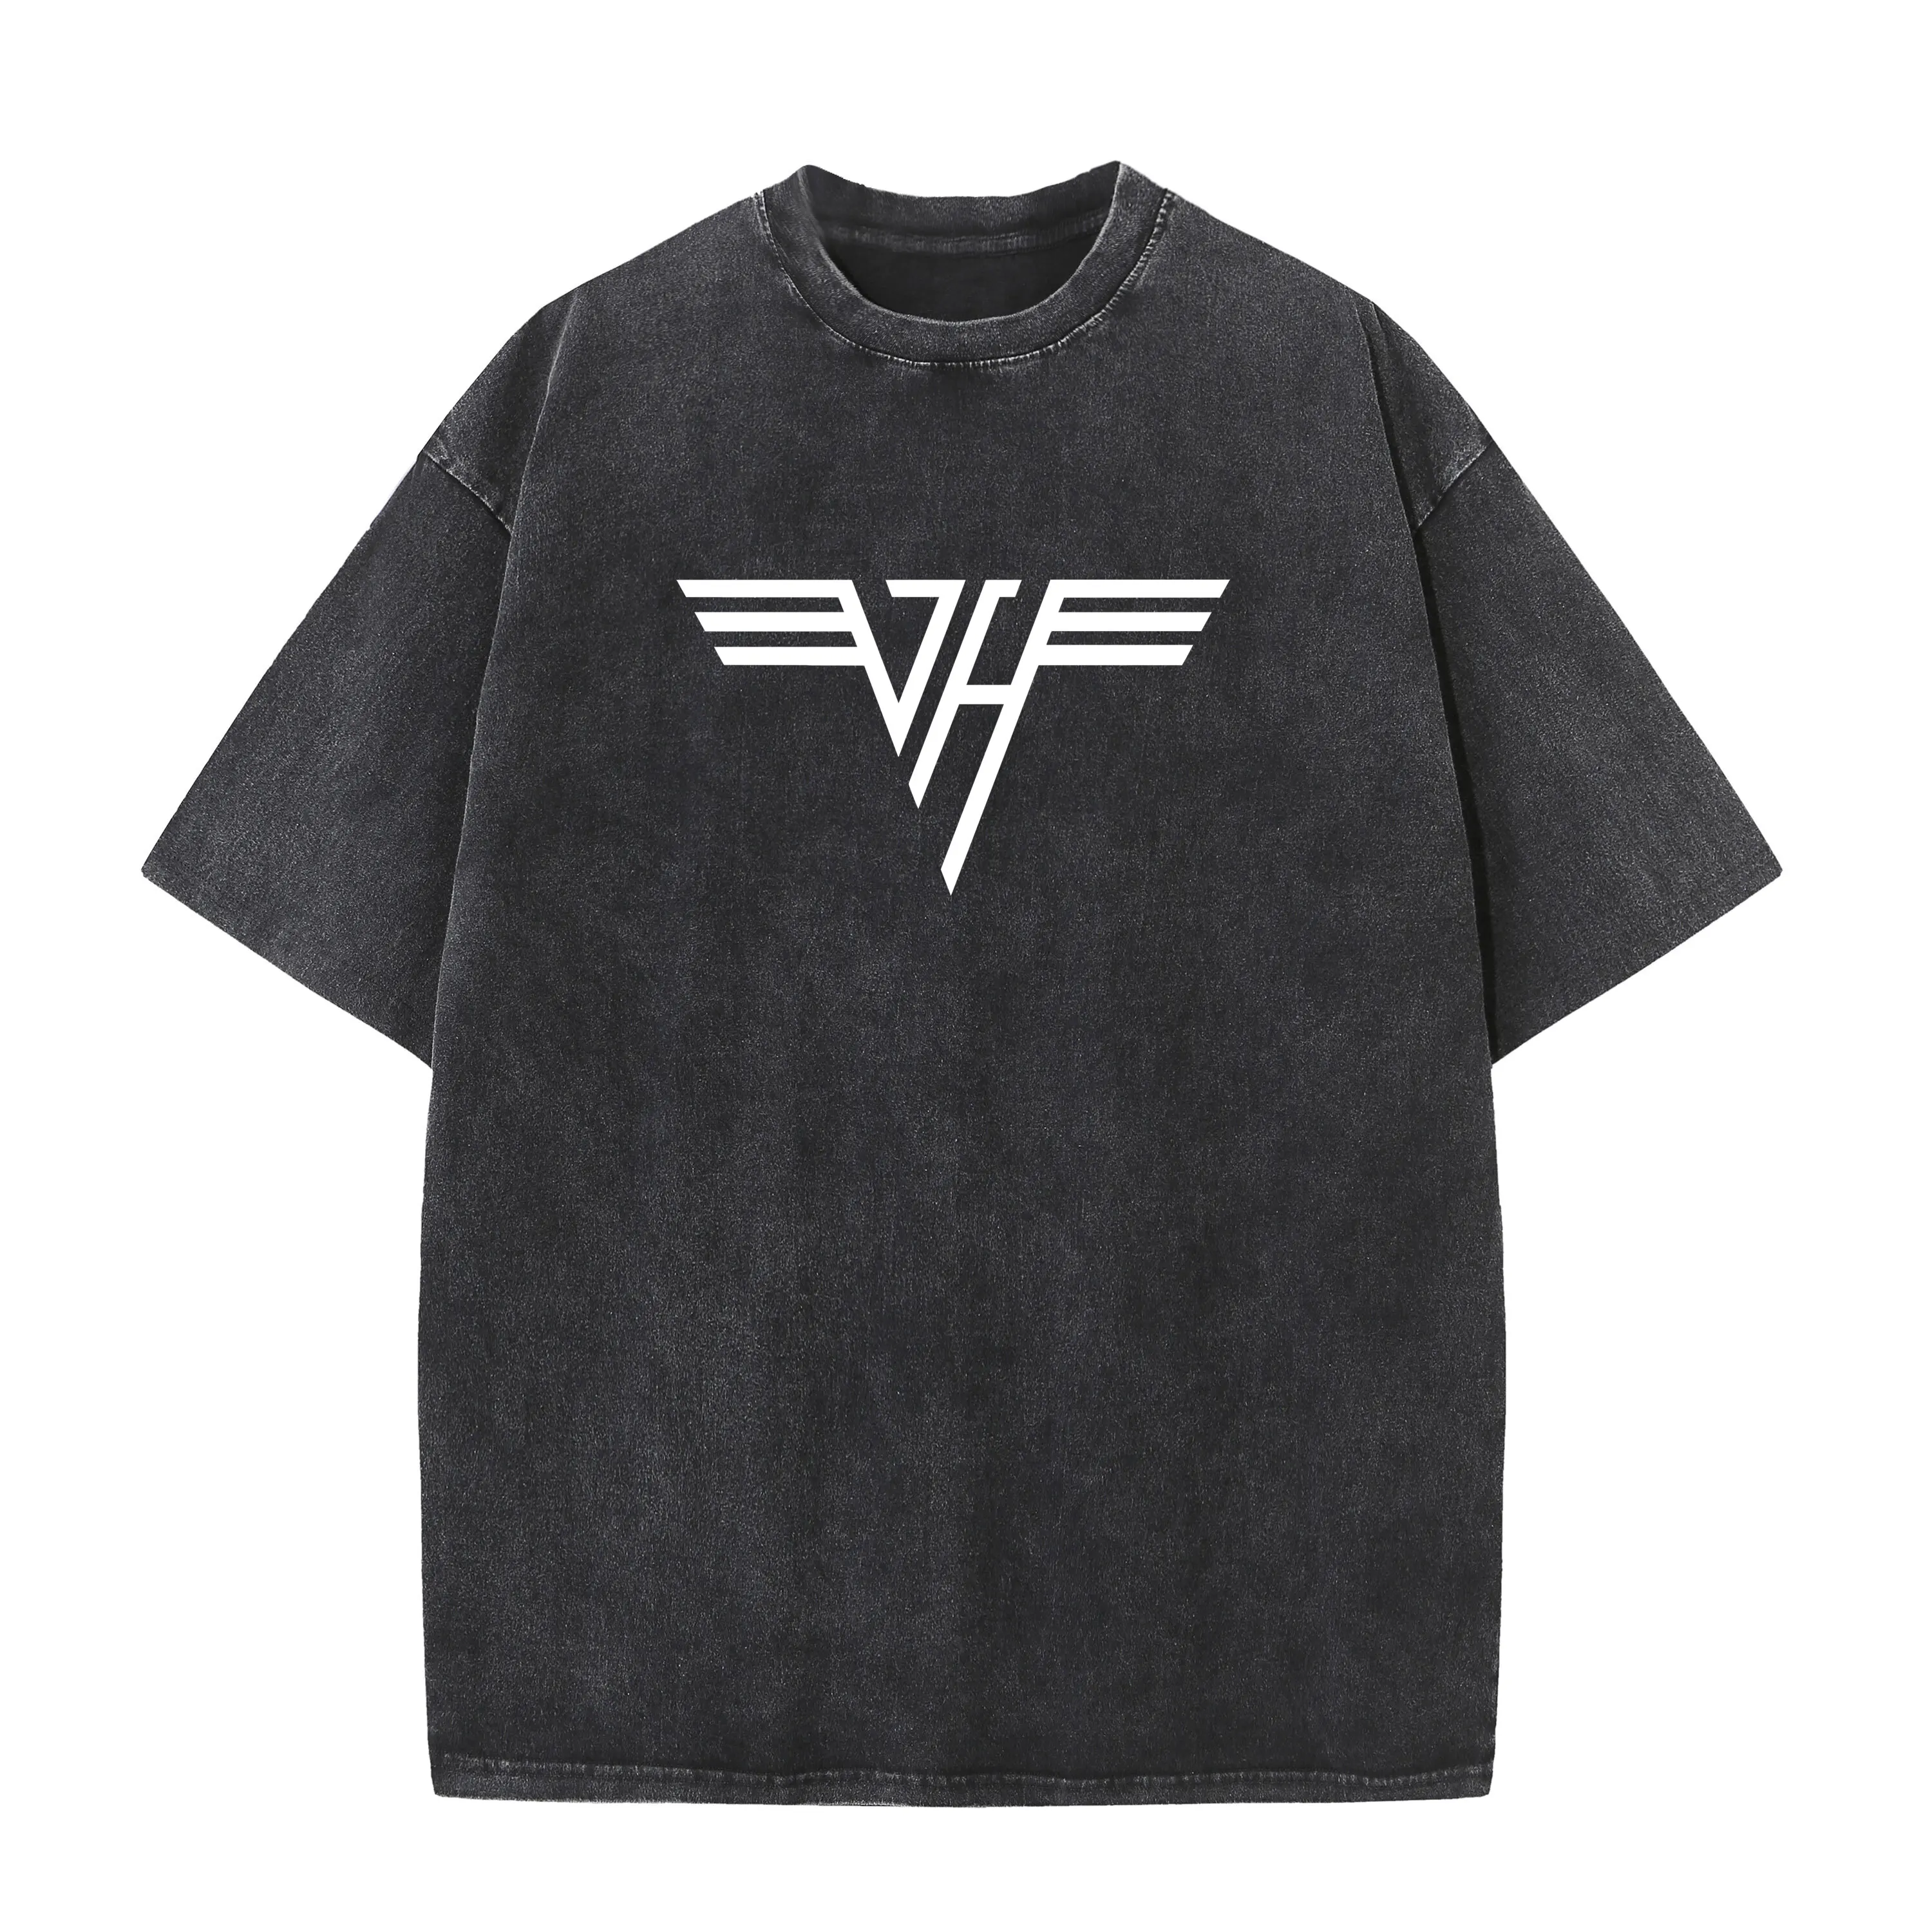 

Van Halen Printed Bleach T-Shirt Men Casusl Streetwear Rock Band Tshirt Fashion High Quality Washed Unisex Shirt Tops